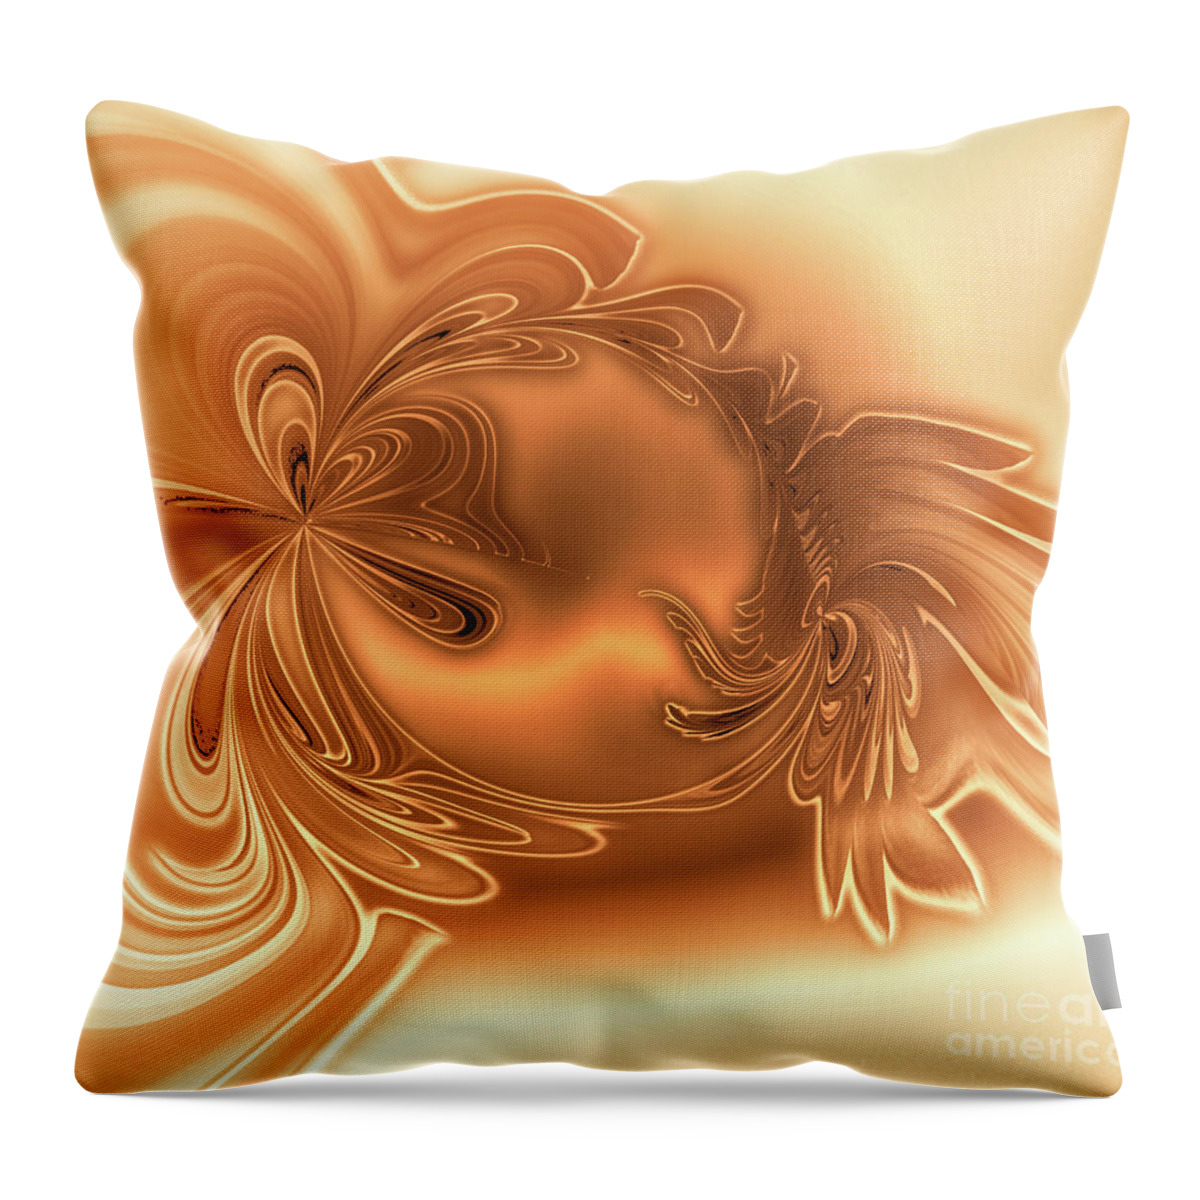 Edelstein Throw Pillow featuring the digital art Gemstone Bronze by Eva-Maria Di Bella